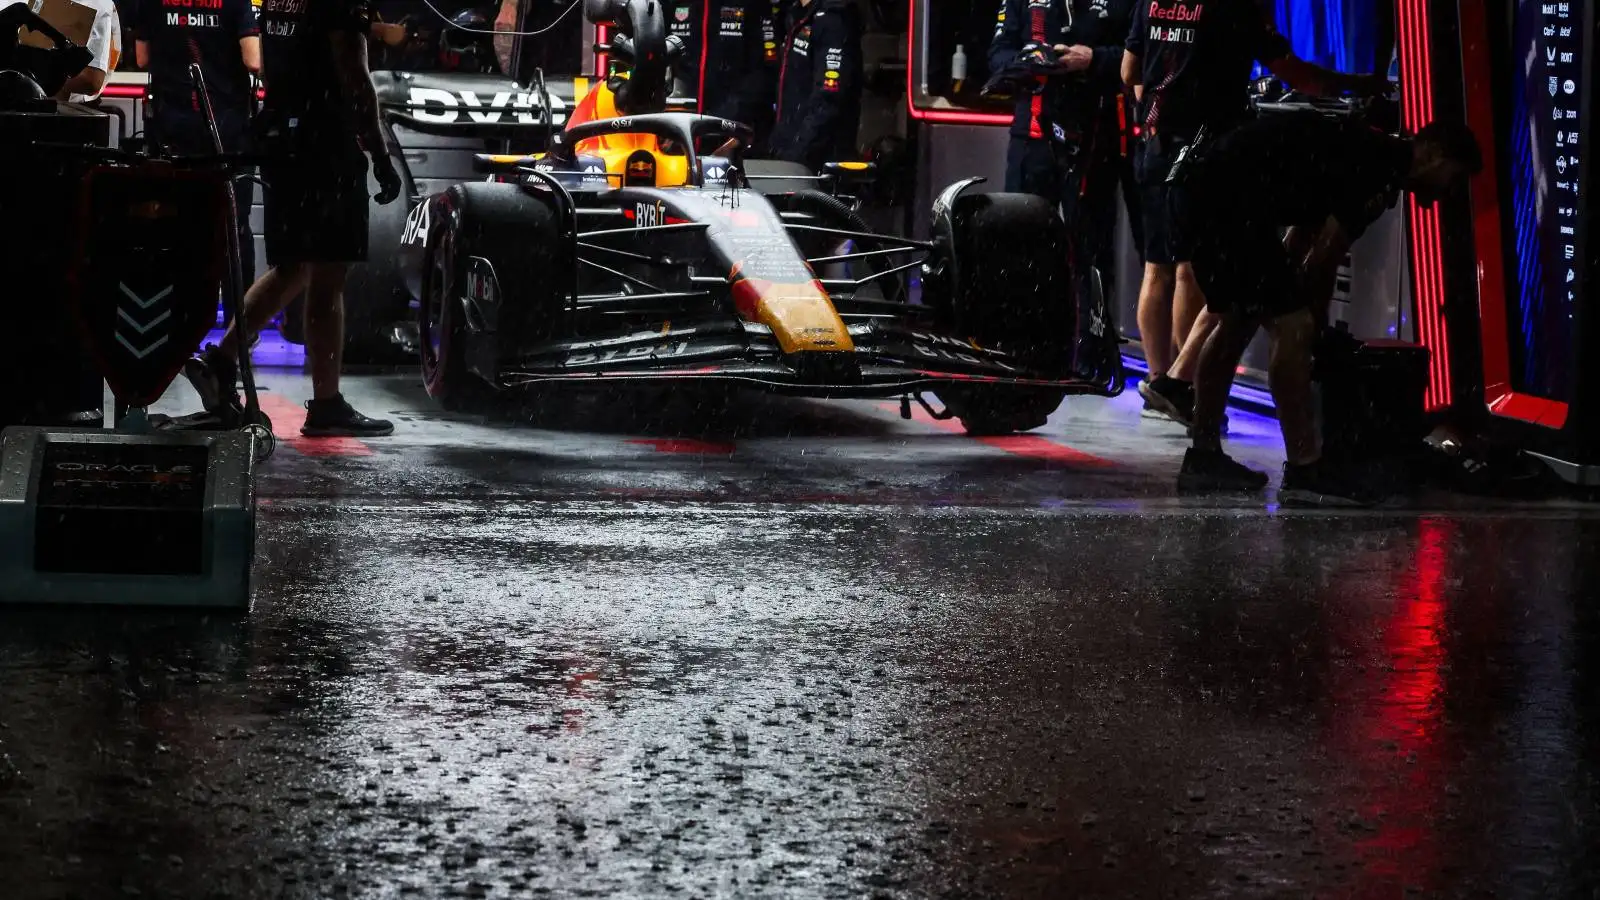 Heavy rain falling outside the Red Bull garage at Interlagos.